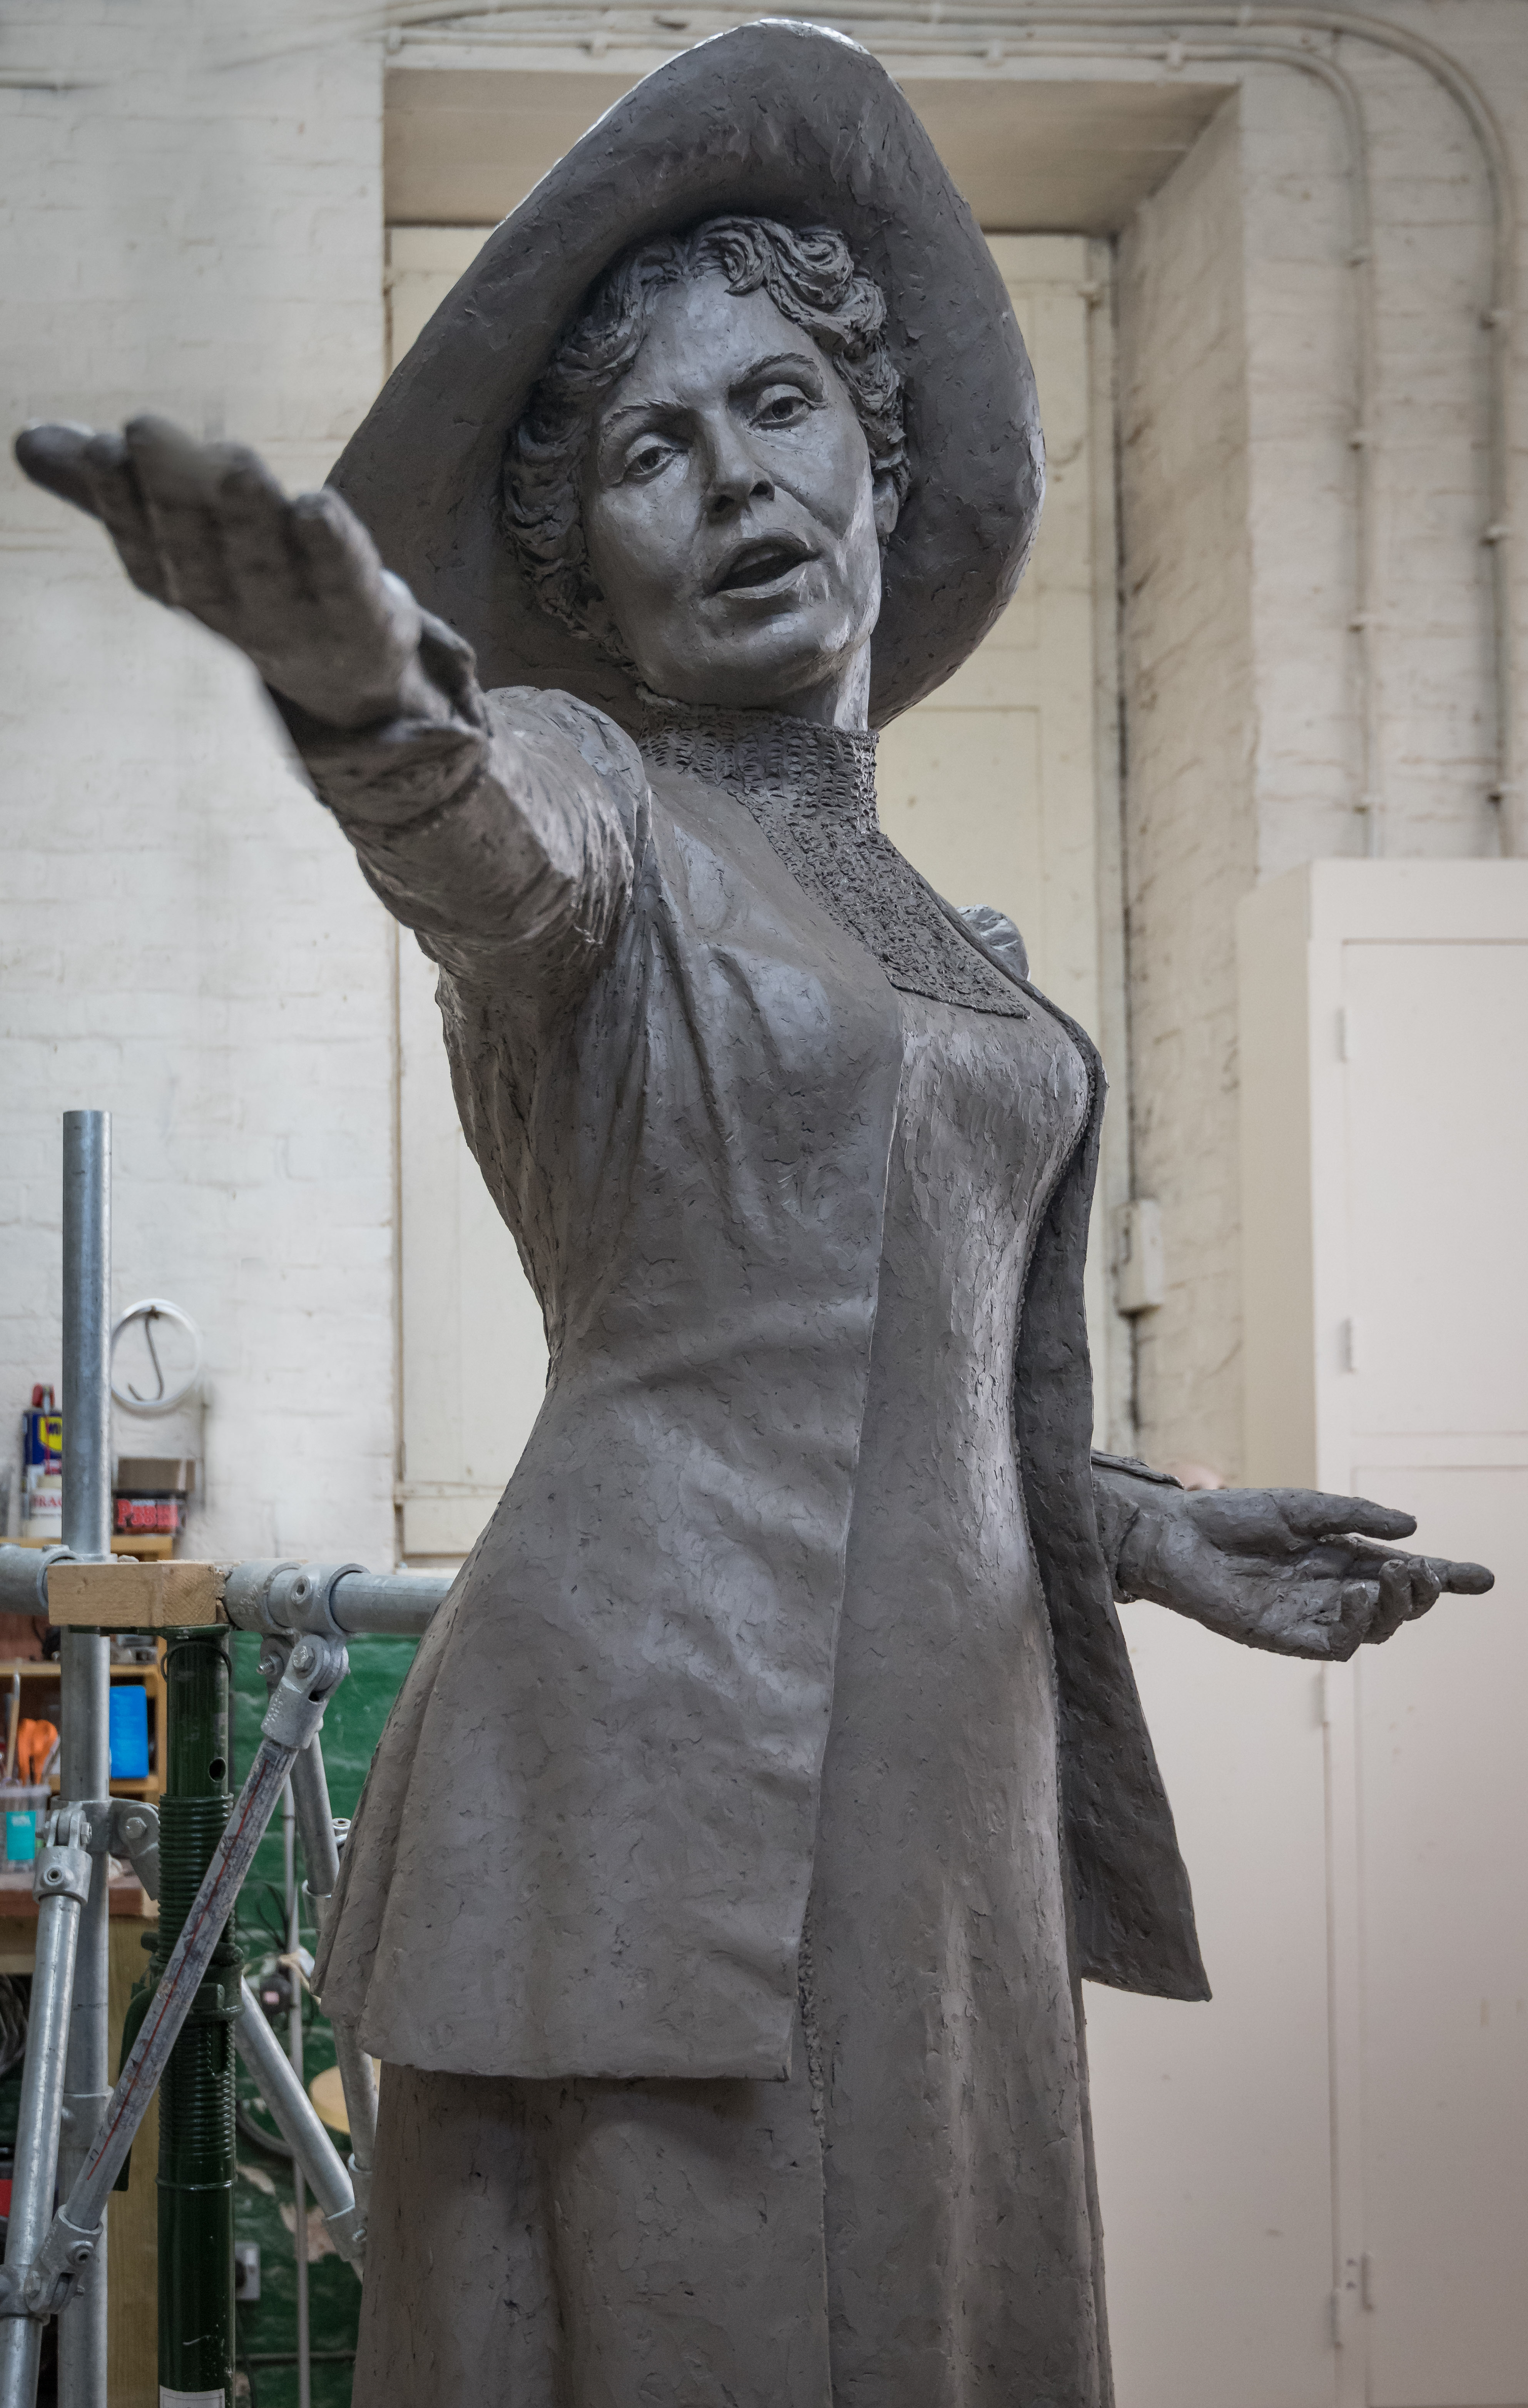 Photo of the final Emmeline Pankhurst sculpture in clay by Hazel Reeves, photo Nigel Kingston